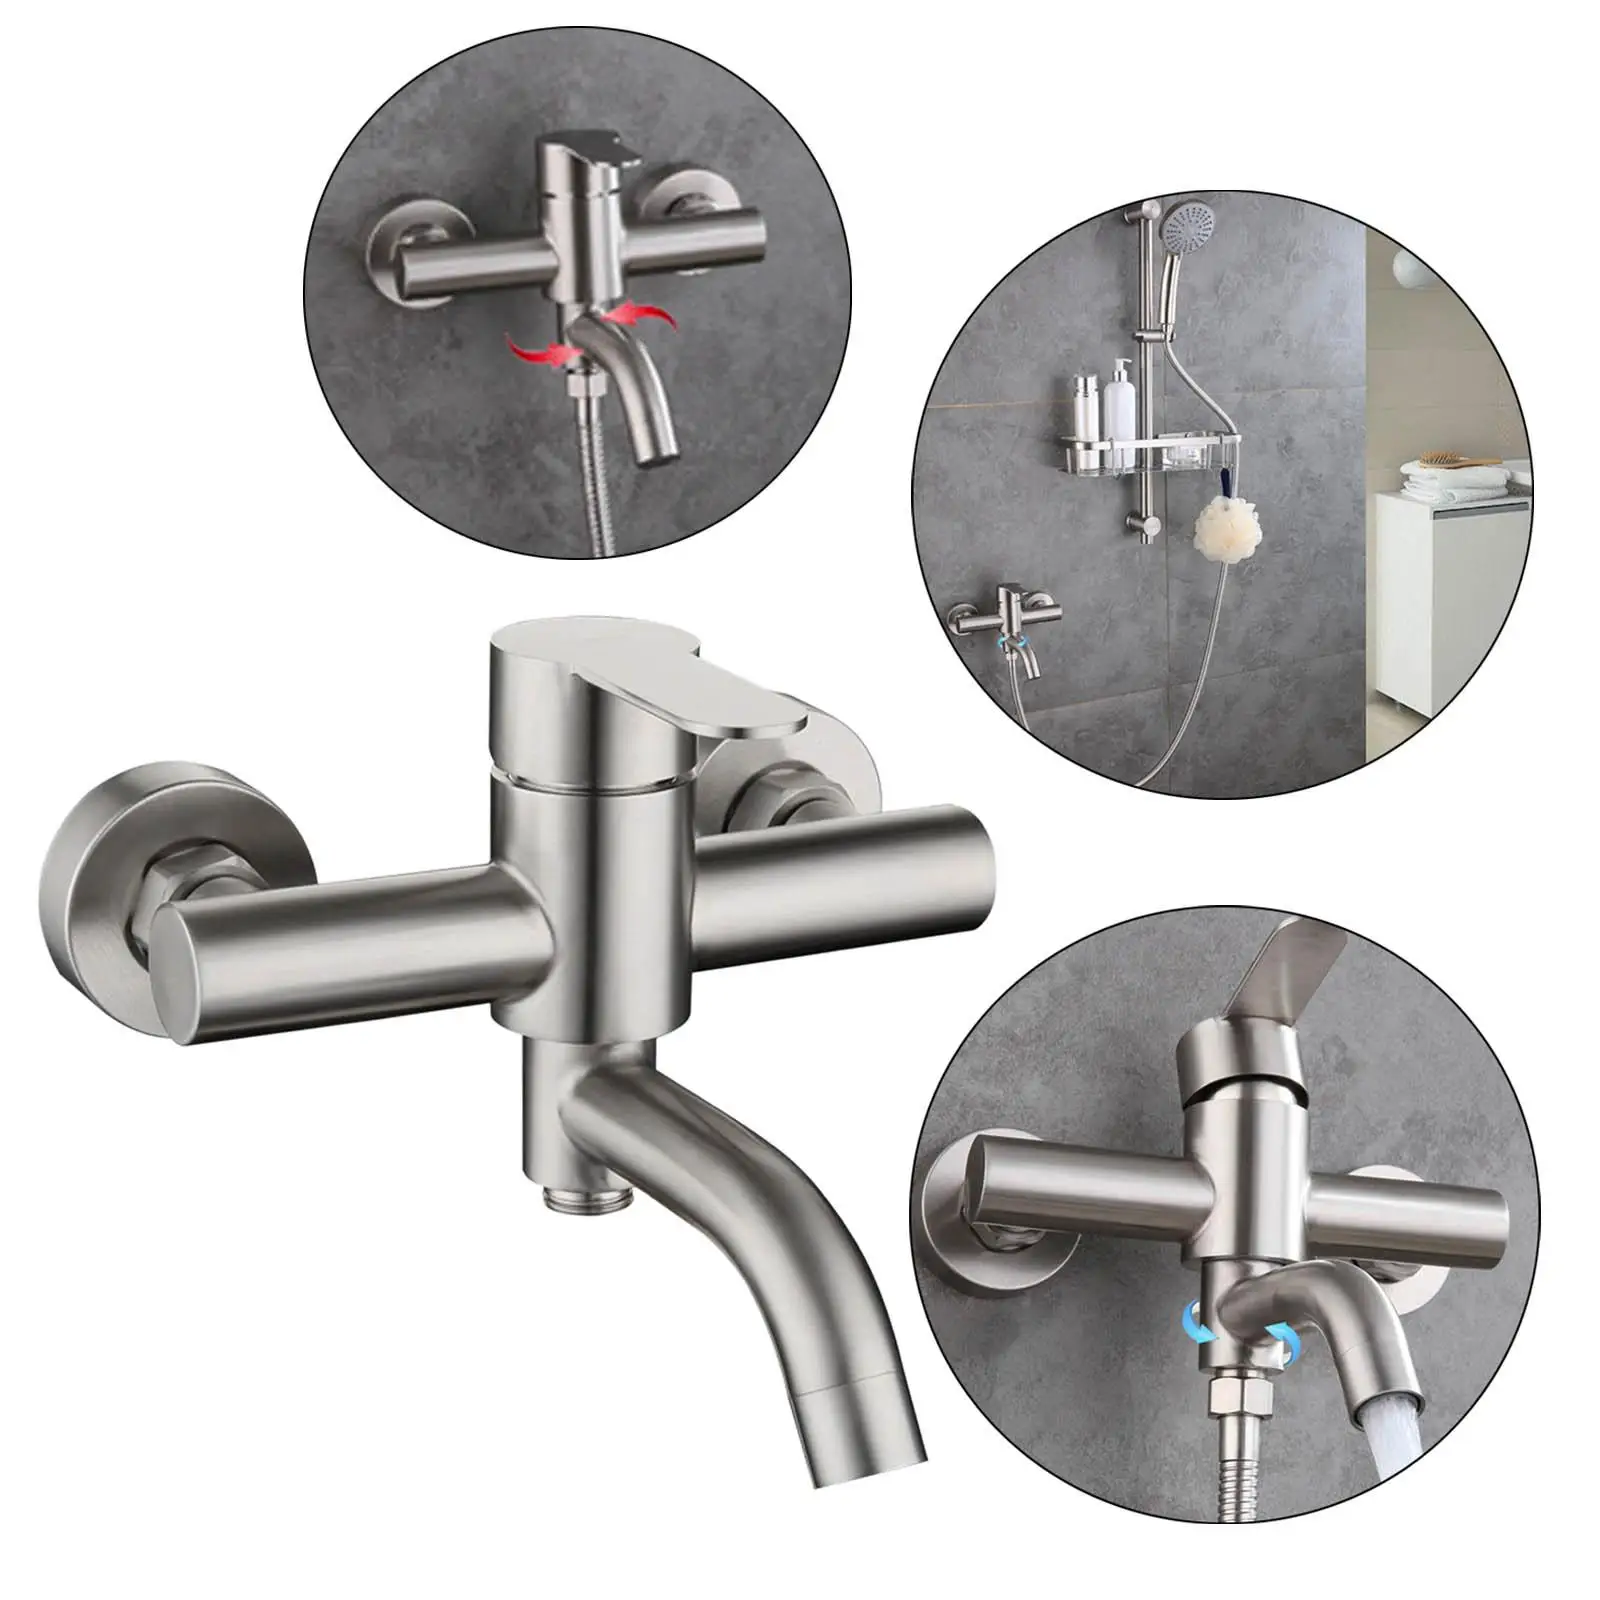 Stainless Steel Shower Mixer Faucet Bathroom Fixtures Bath Tub Mixing Valve